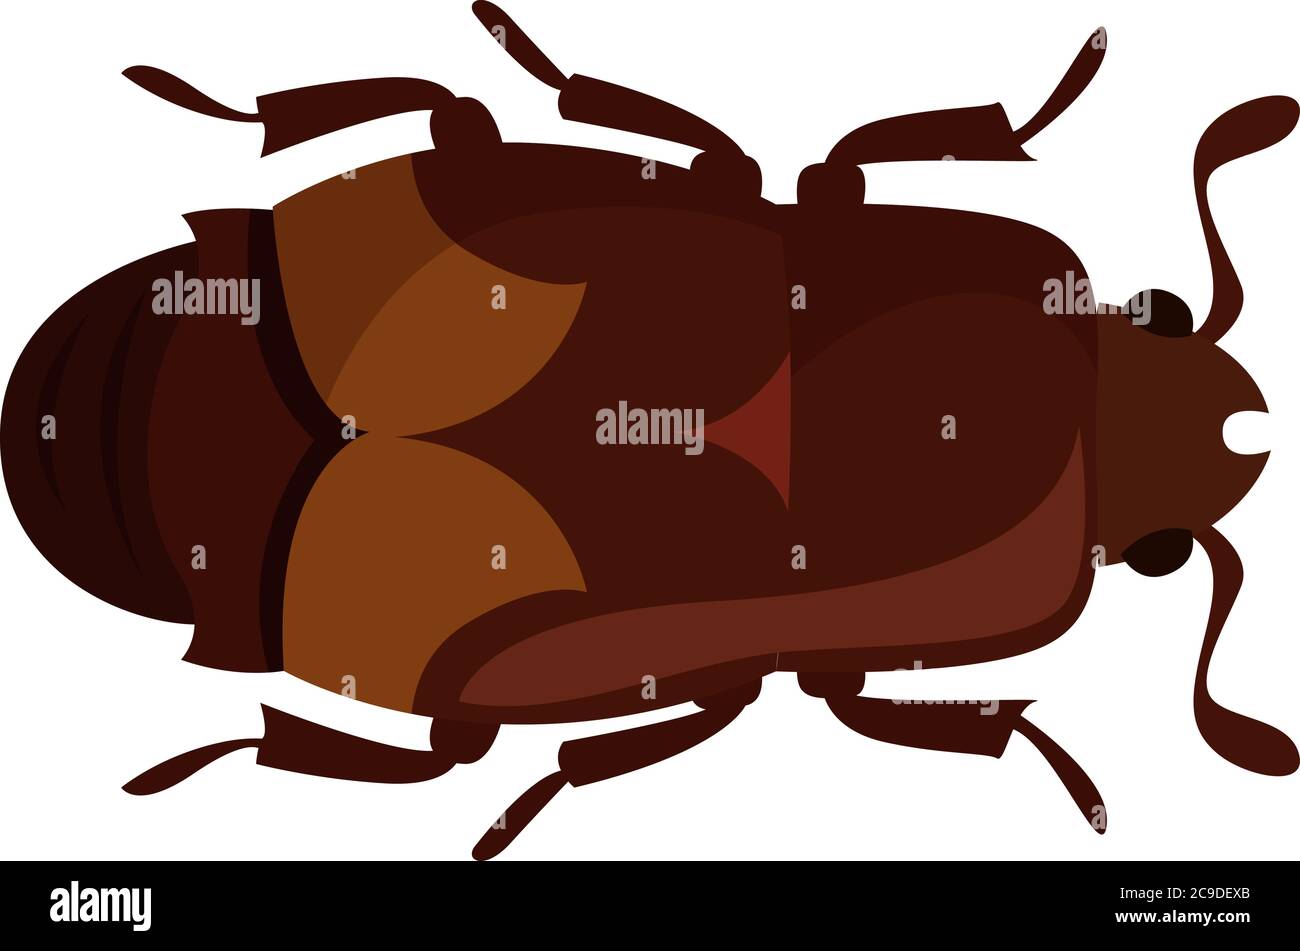 Sap beetle, illustration, vector on white background Stock Vector